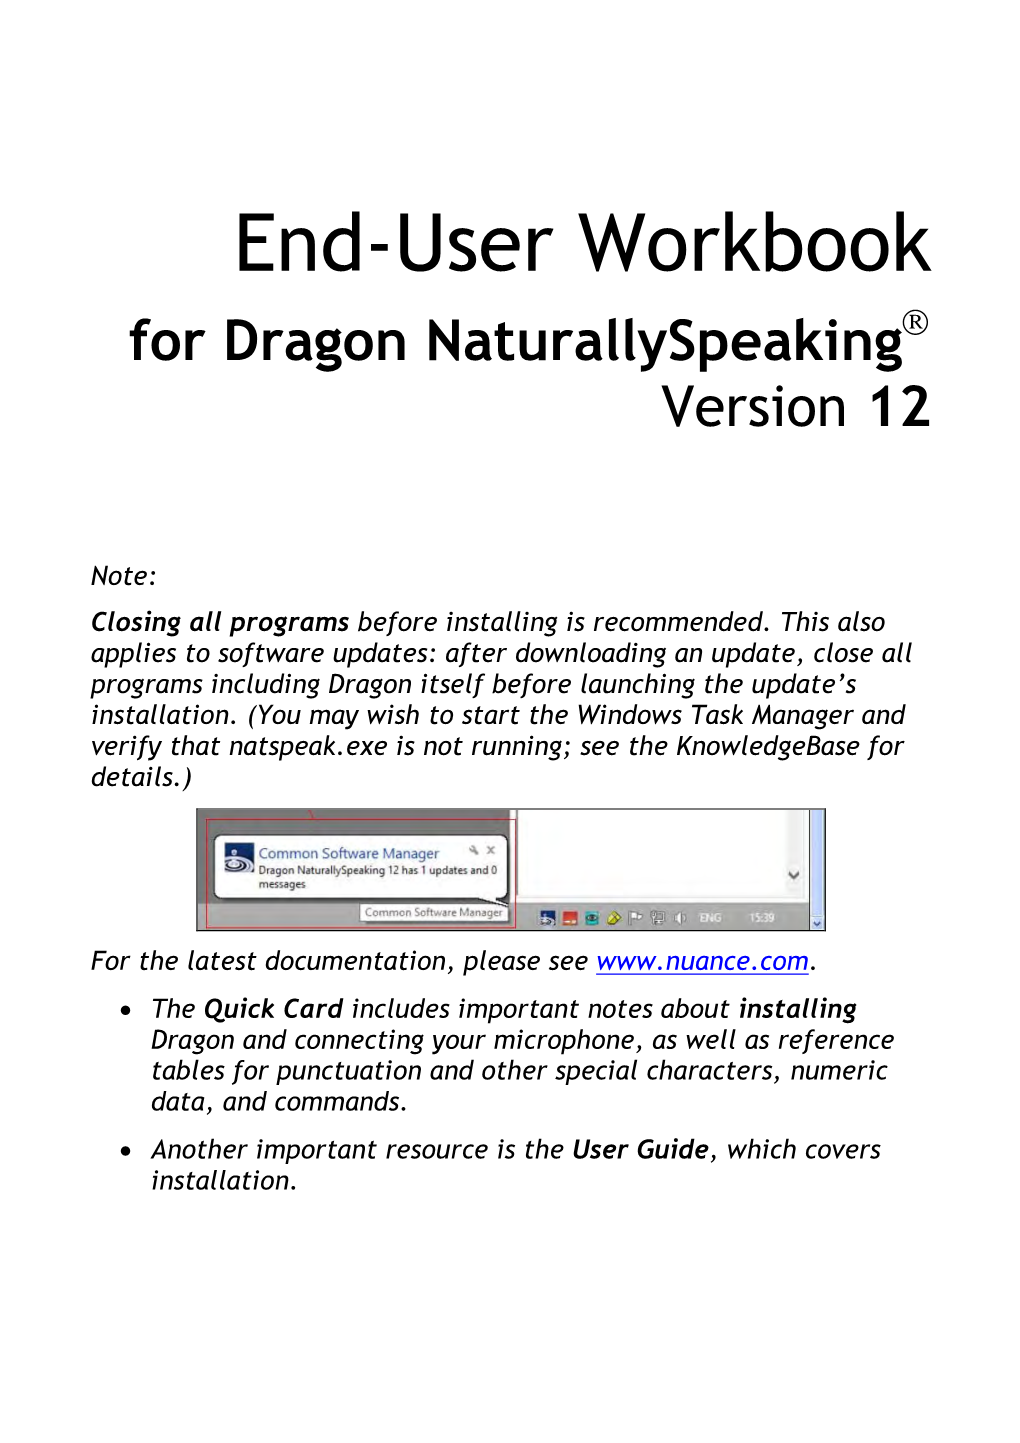 End-User Workbook for Dragon Naturallyspeaking Version 12